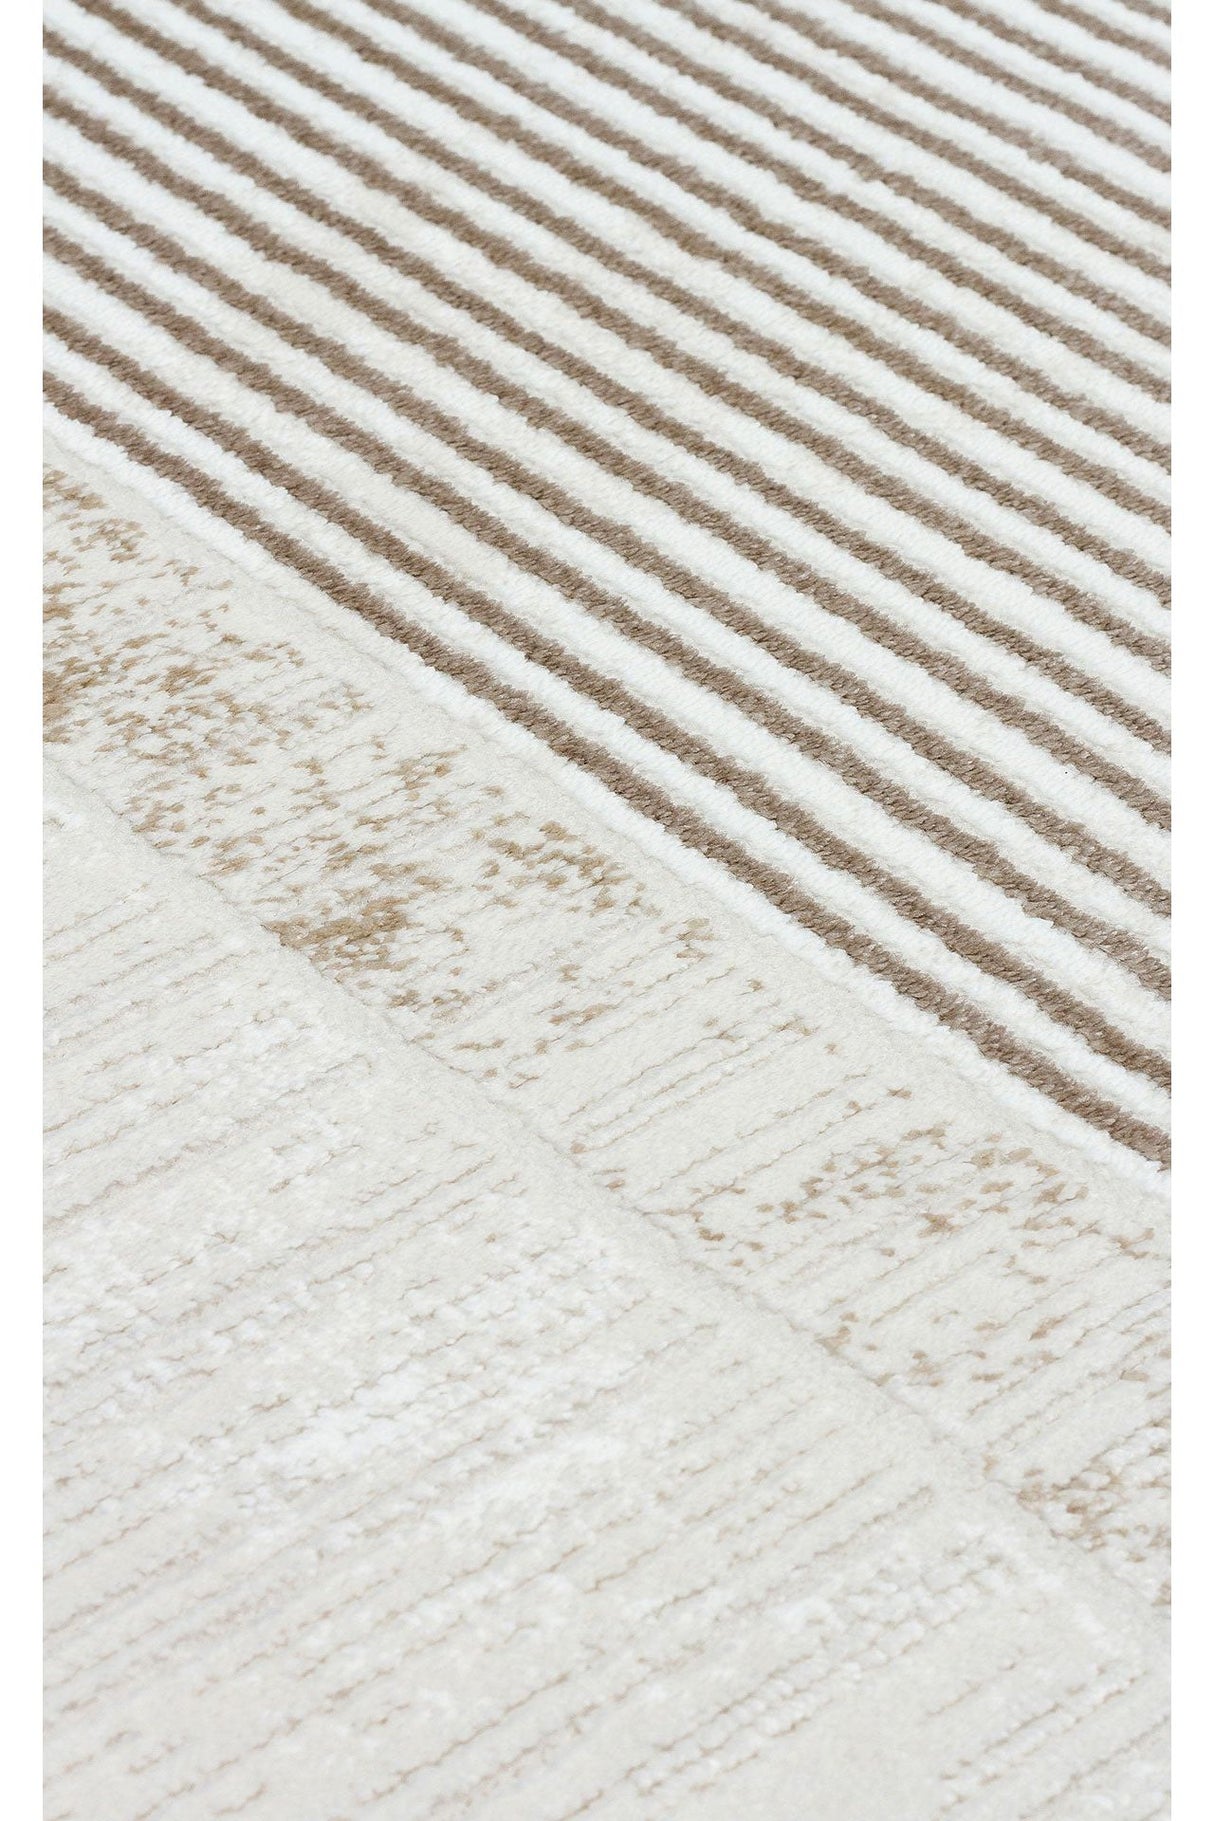 #Turkish_Carpets_Rugs# #Modern_Carpets# #Abrash_Carpets#Lgs 18 Cream Beige Xw